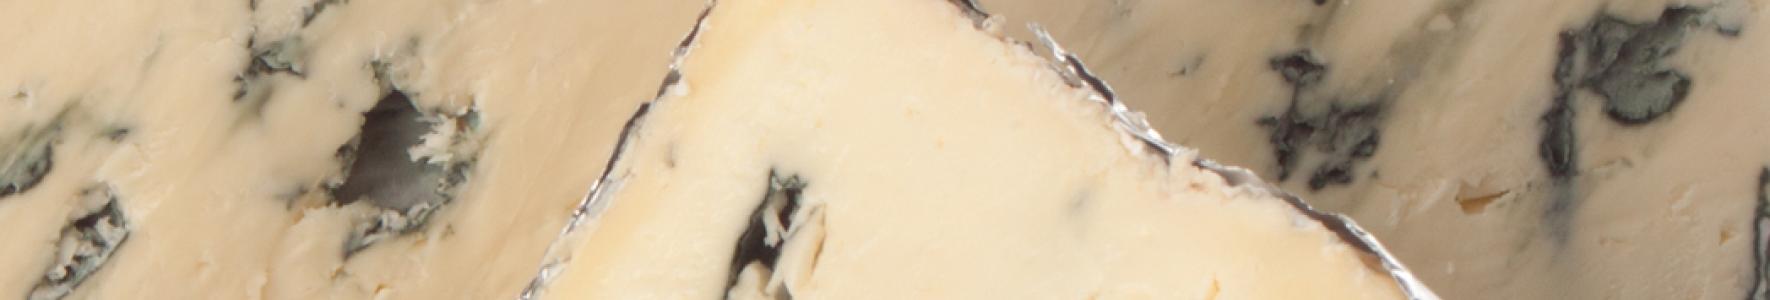 Semi soft blue cheese